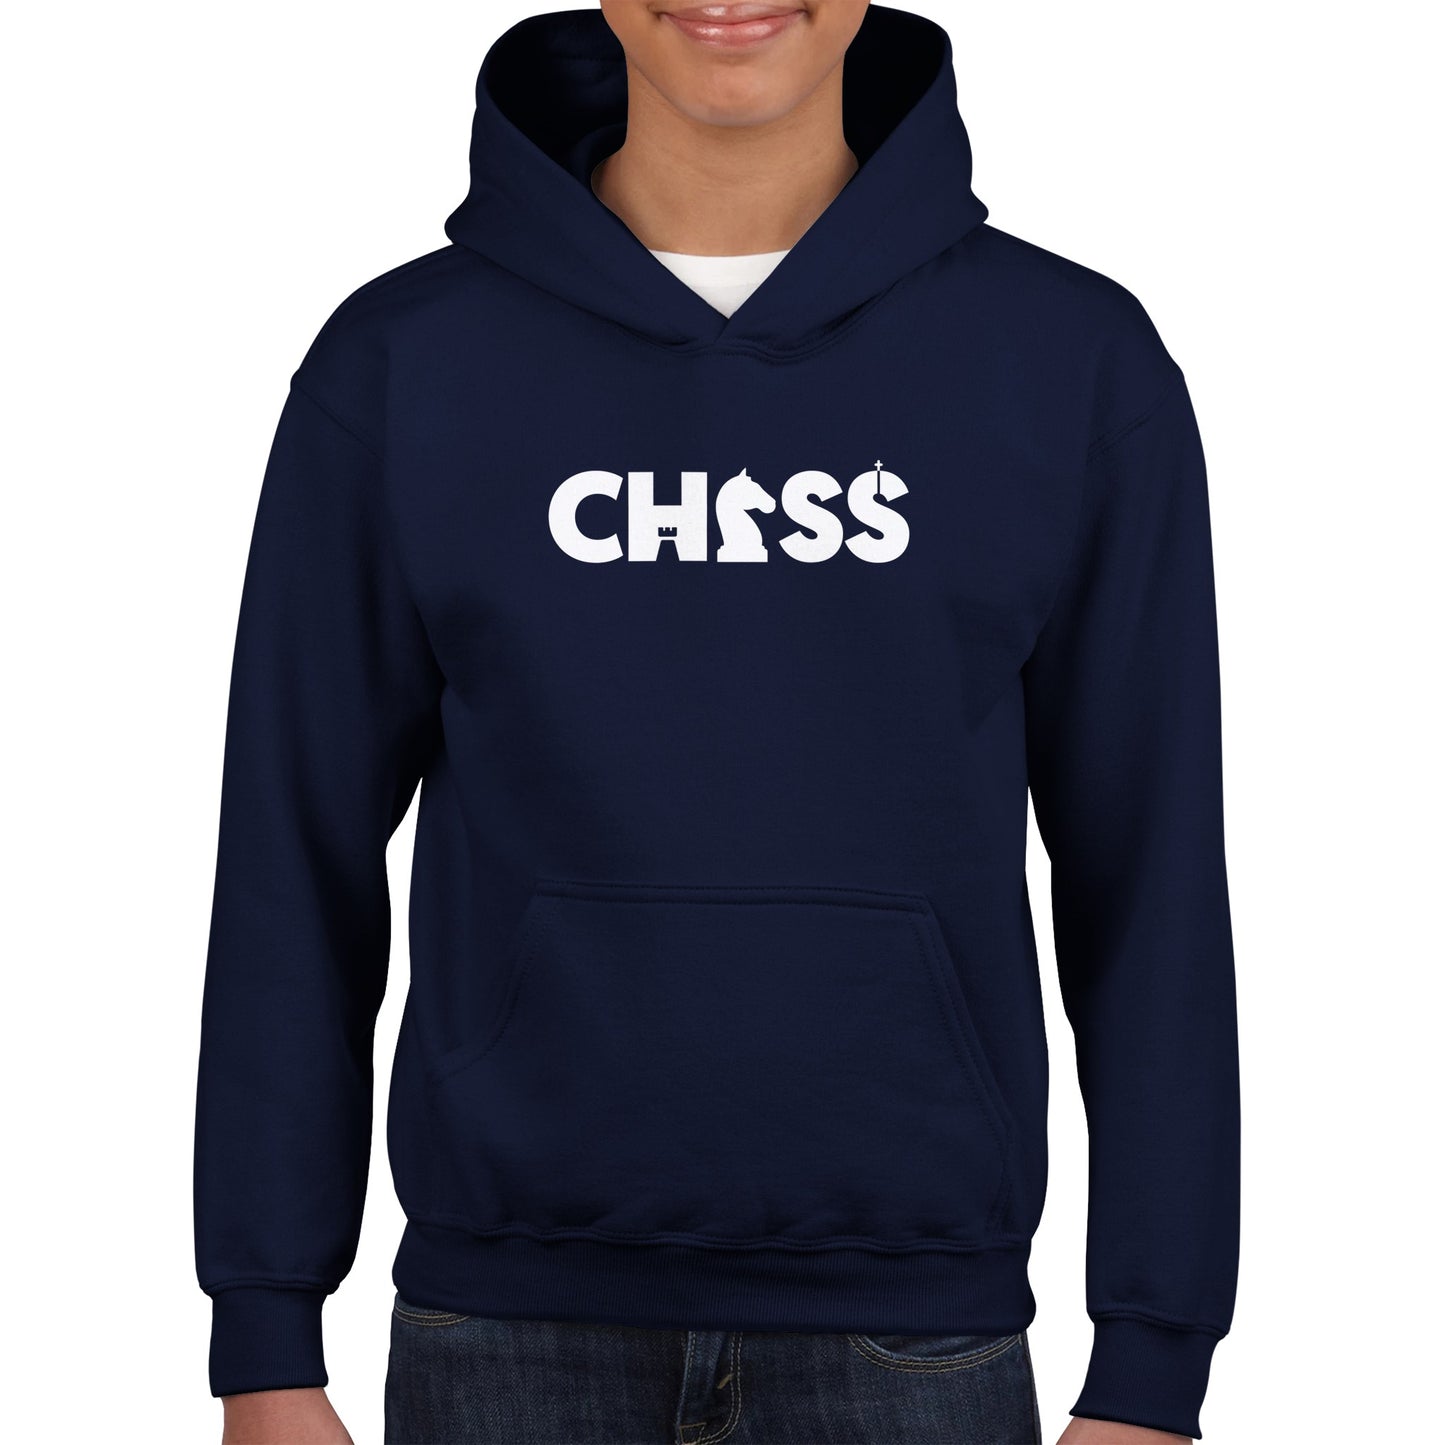 Children's clothing for chess lovers